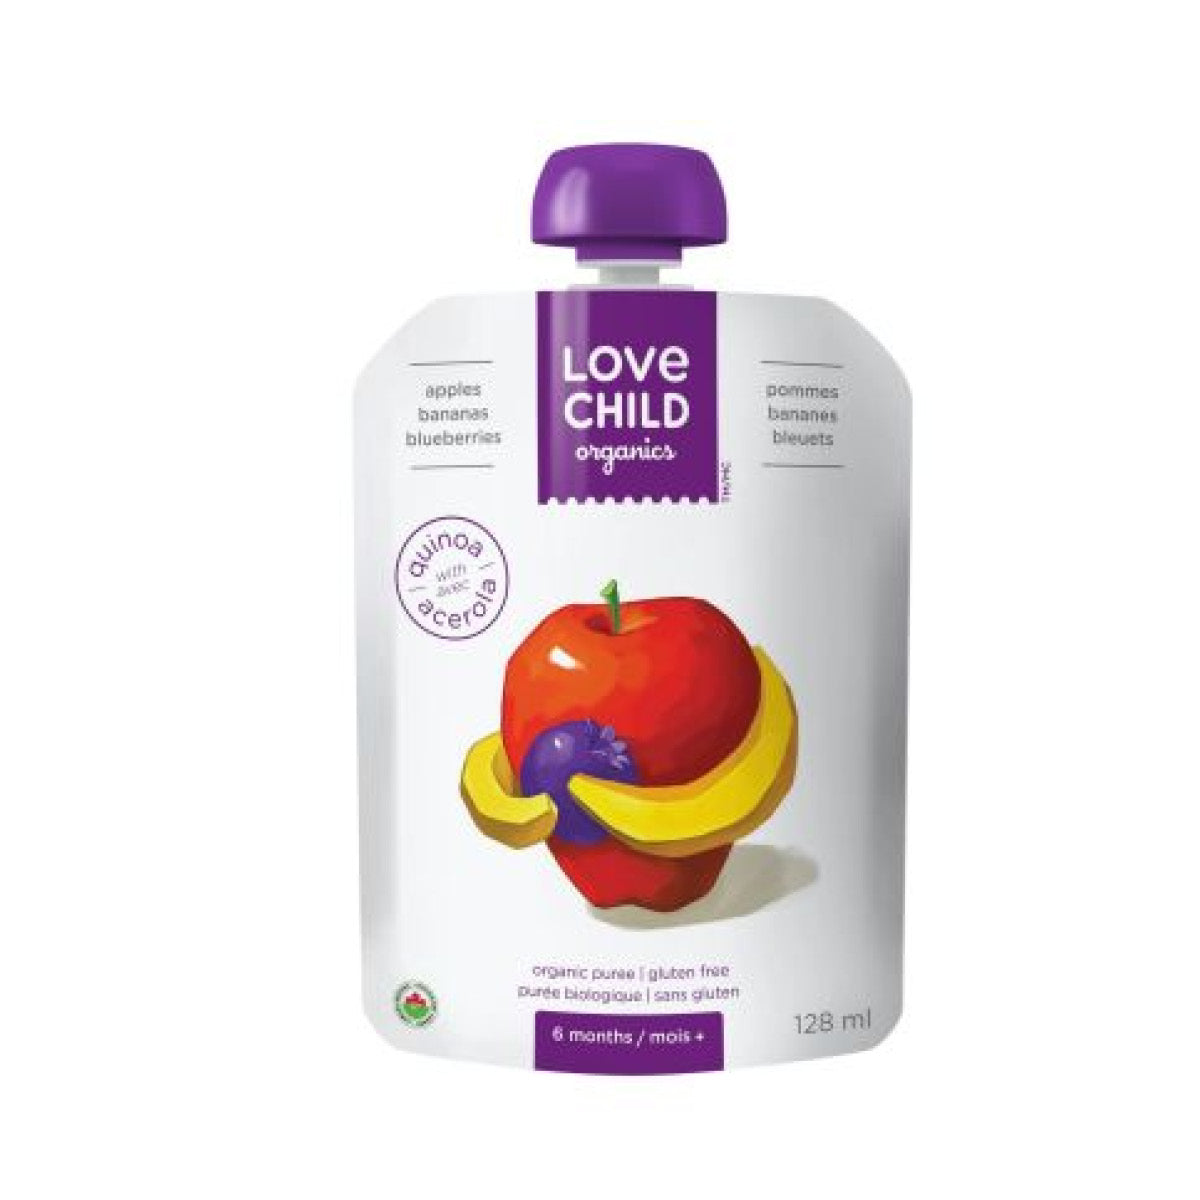 Love Child Organics Baby Food, Apple/Banana/Blueberry, 6+Months, 128ml